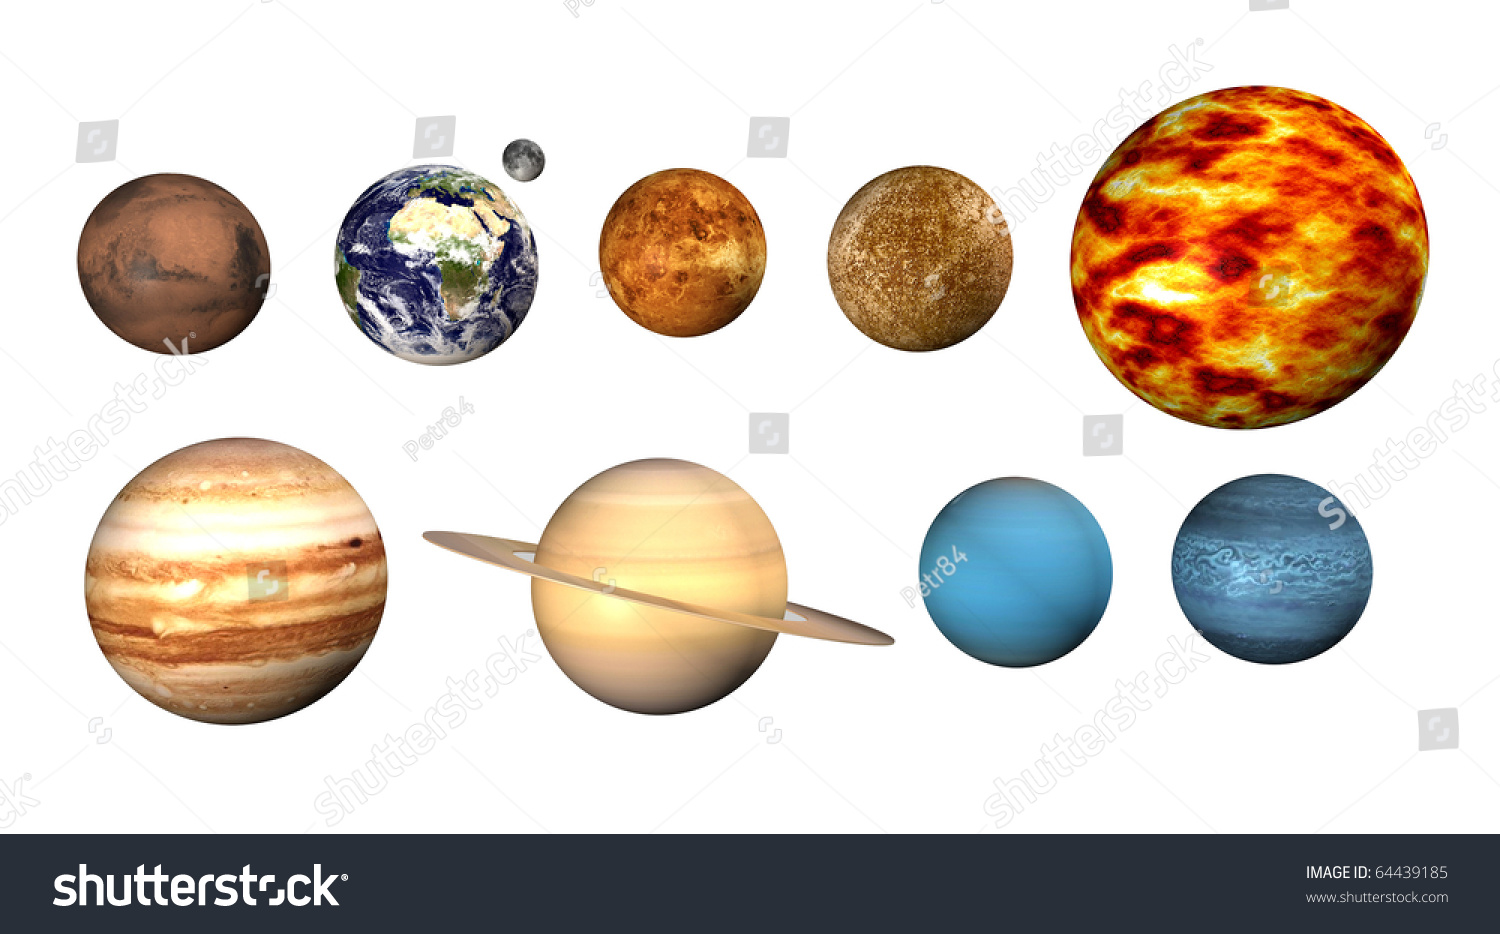 Planets On White Background Stock Illustration 64439185 - Shutterstock1500 x 934